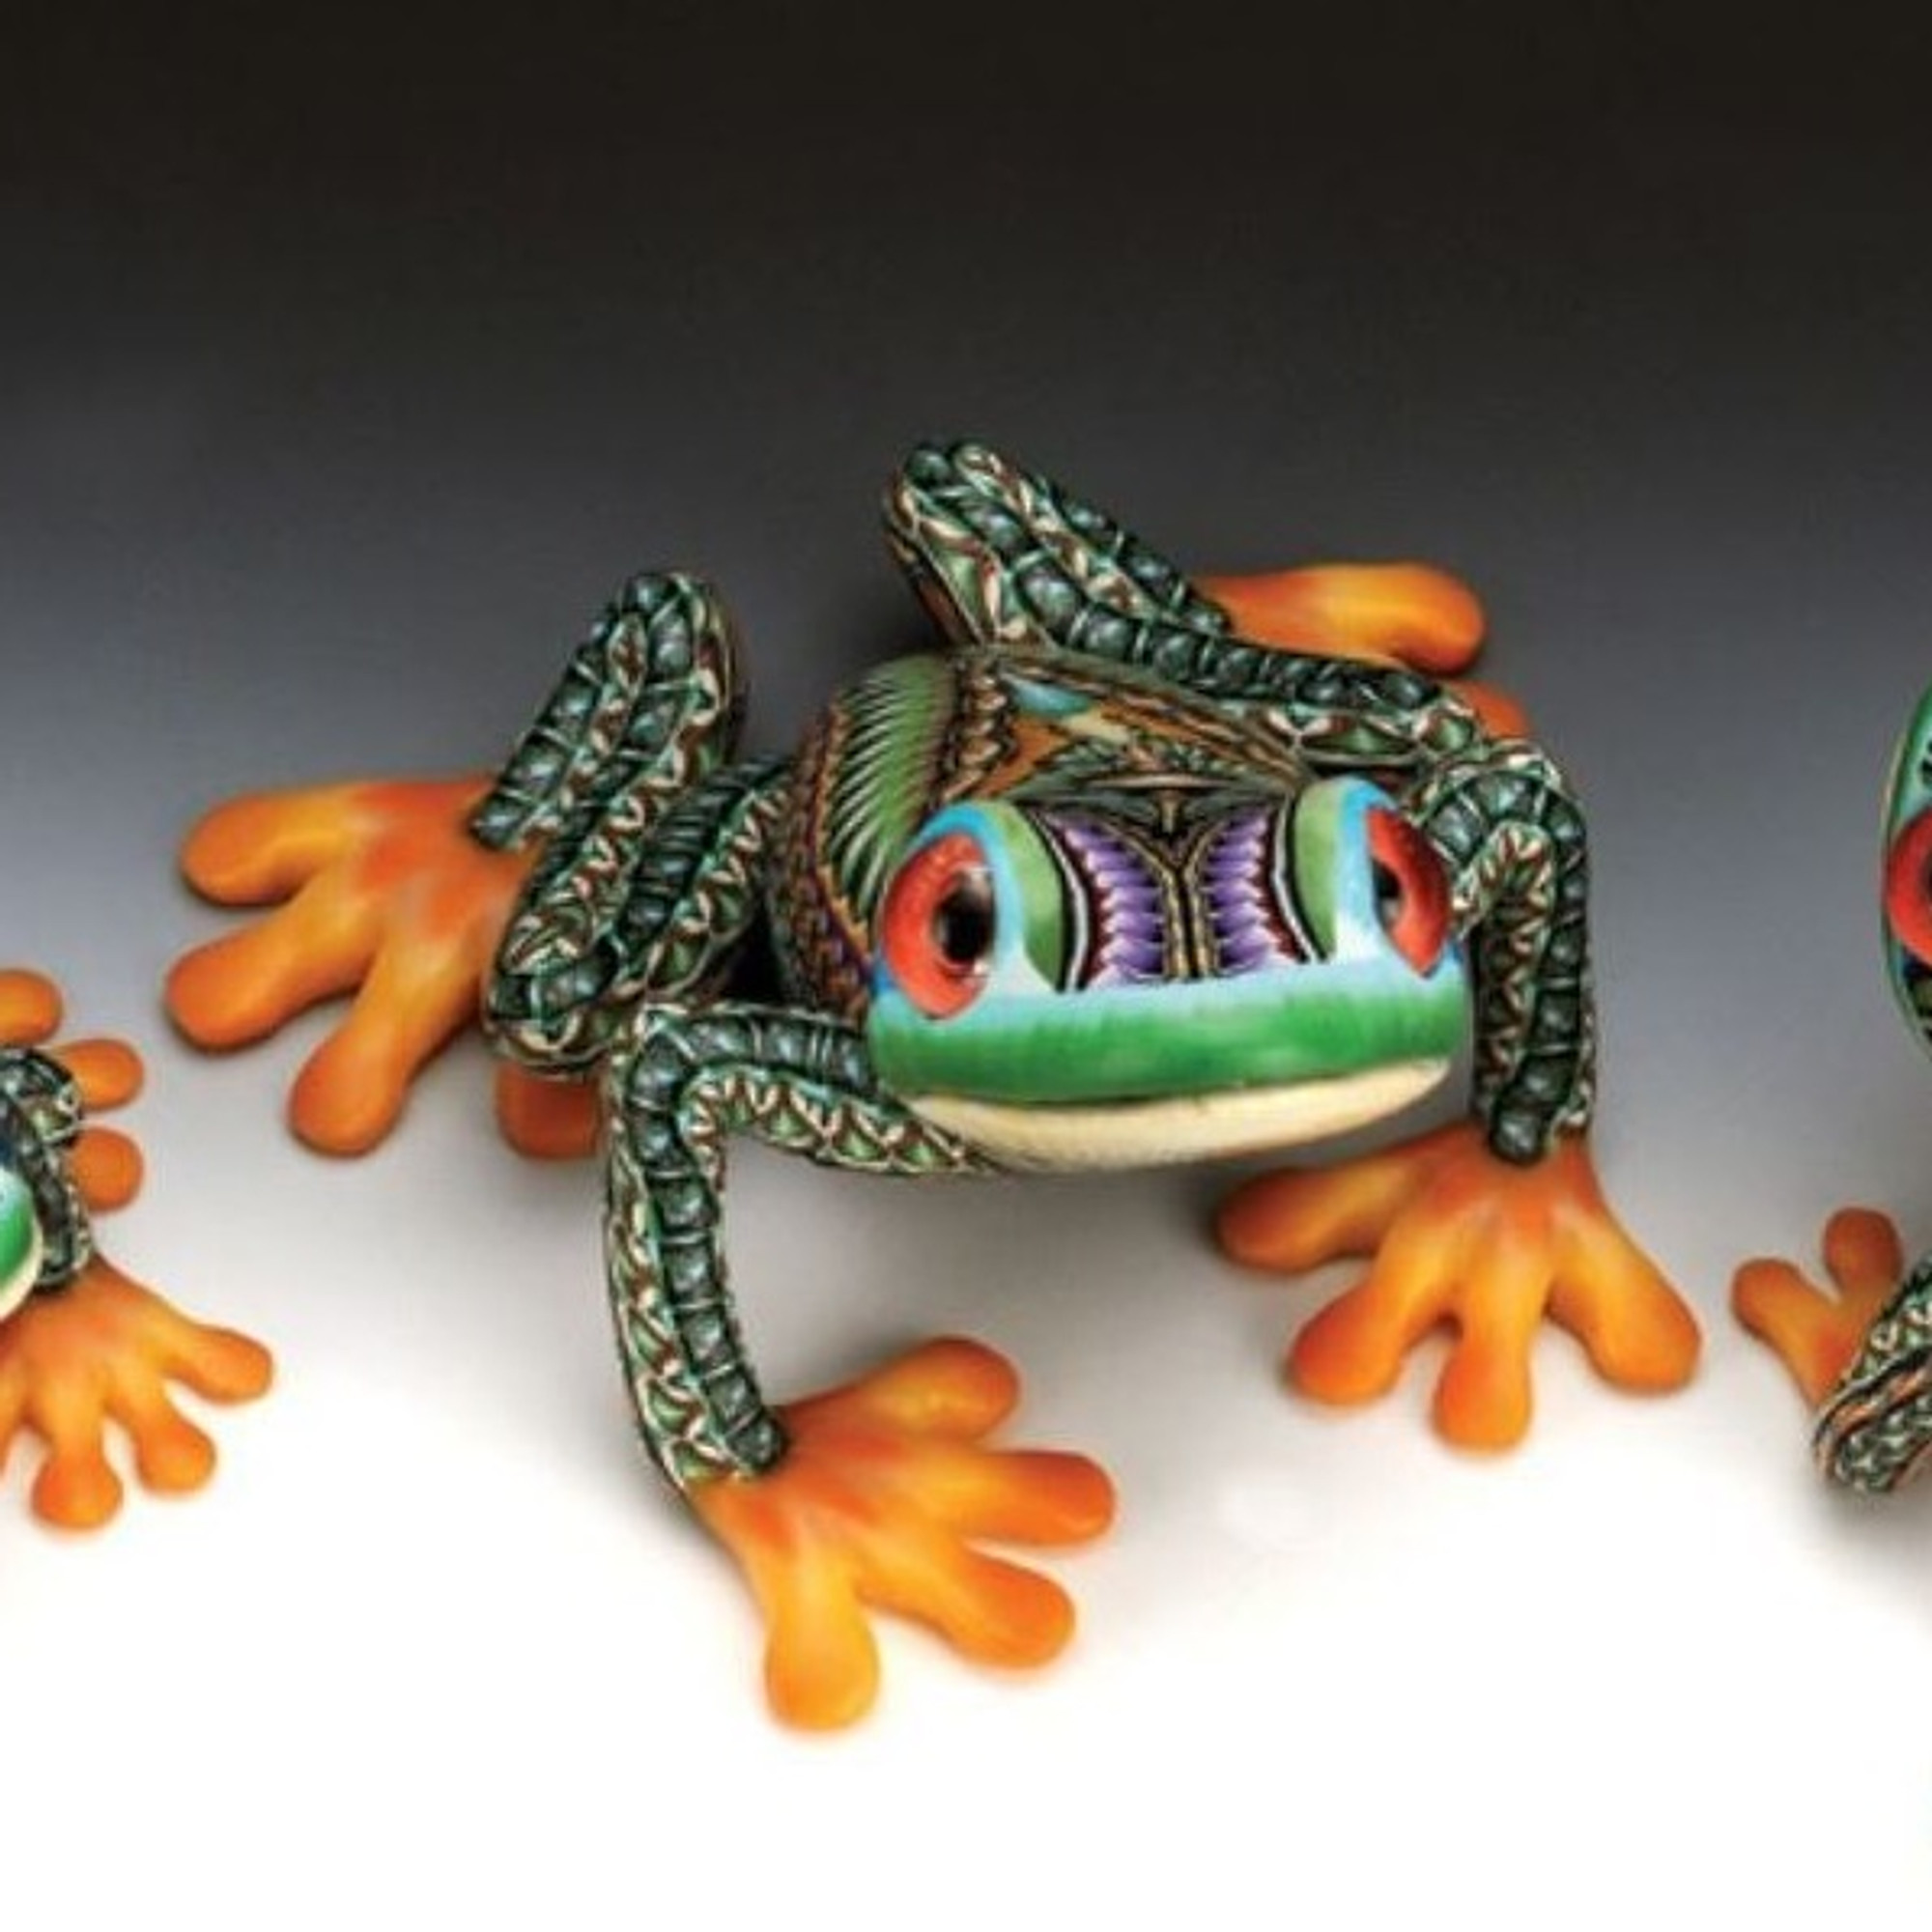 Shell Frog Figurine, Frog figurine, Shell Art